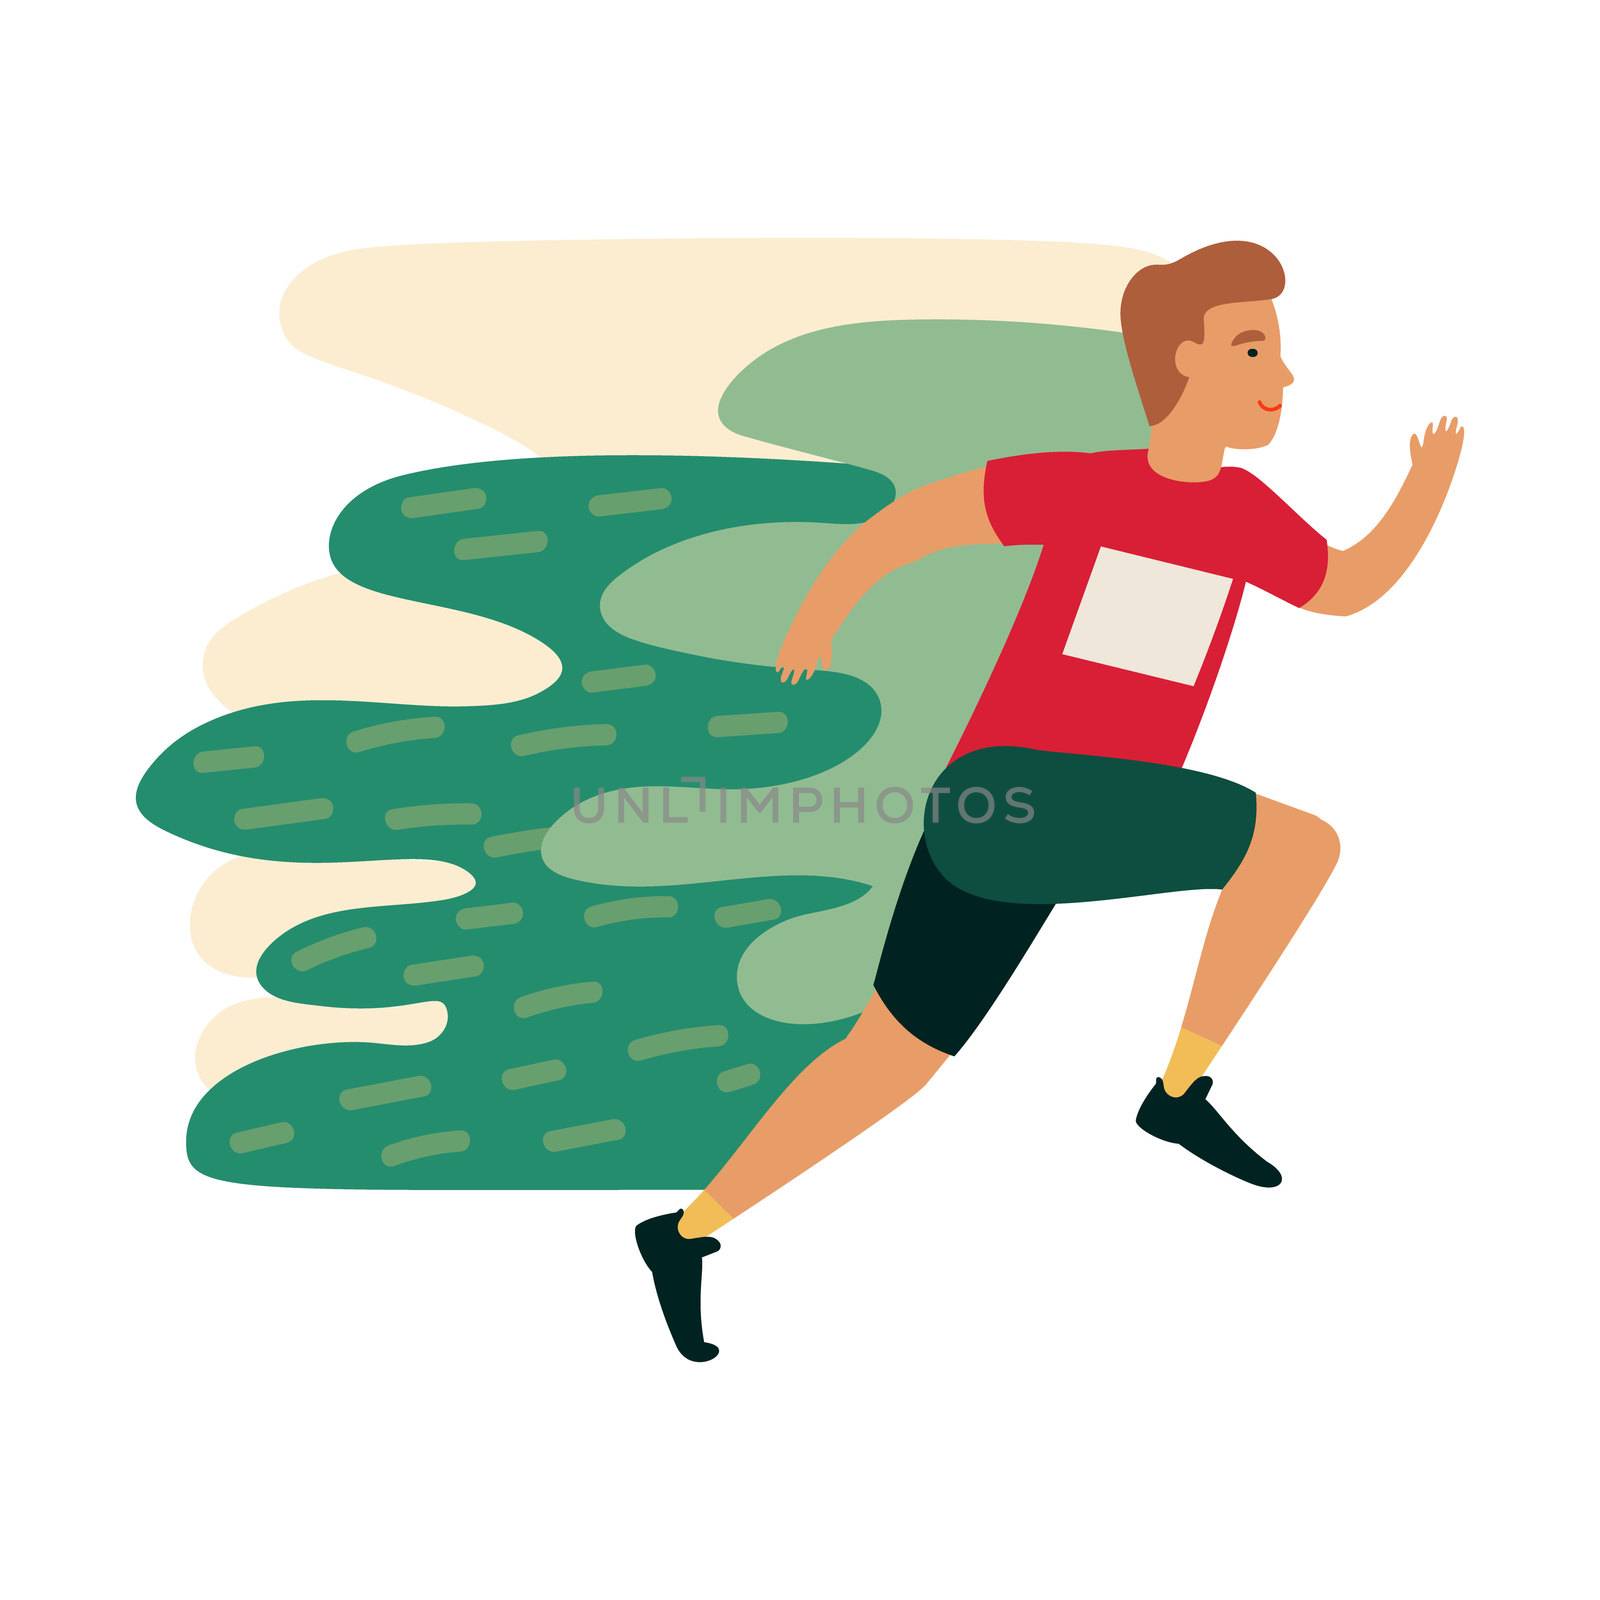 Runner athlete in motion. Athlete sprinter guy on workout. Funny cartoon man running.